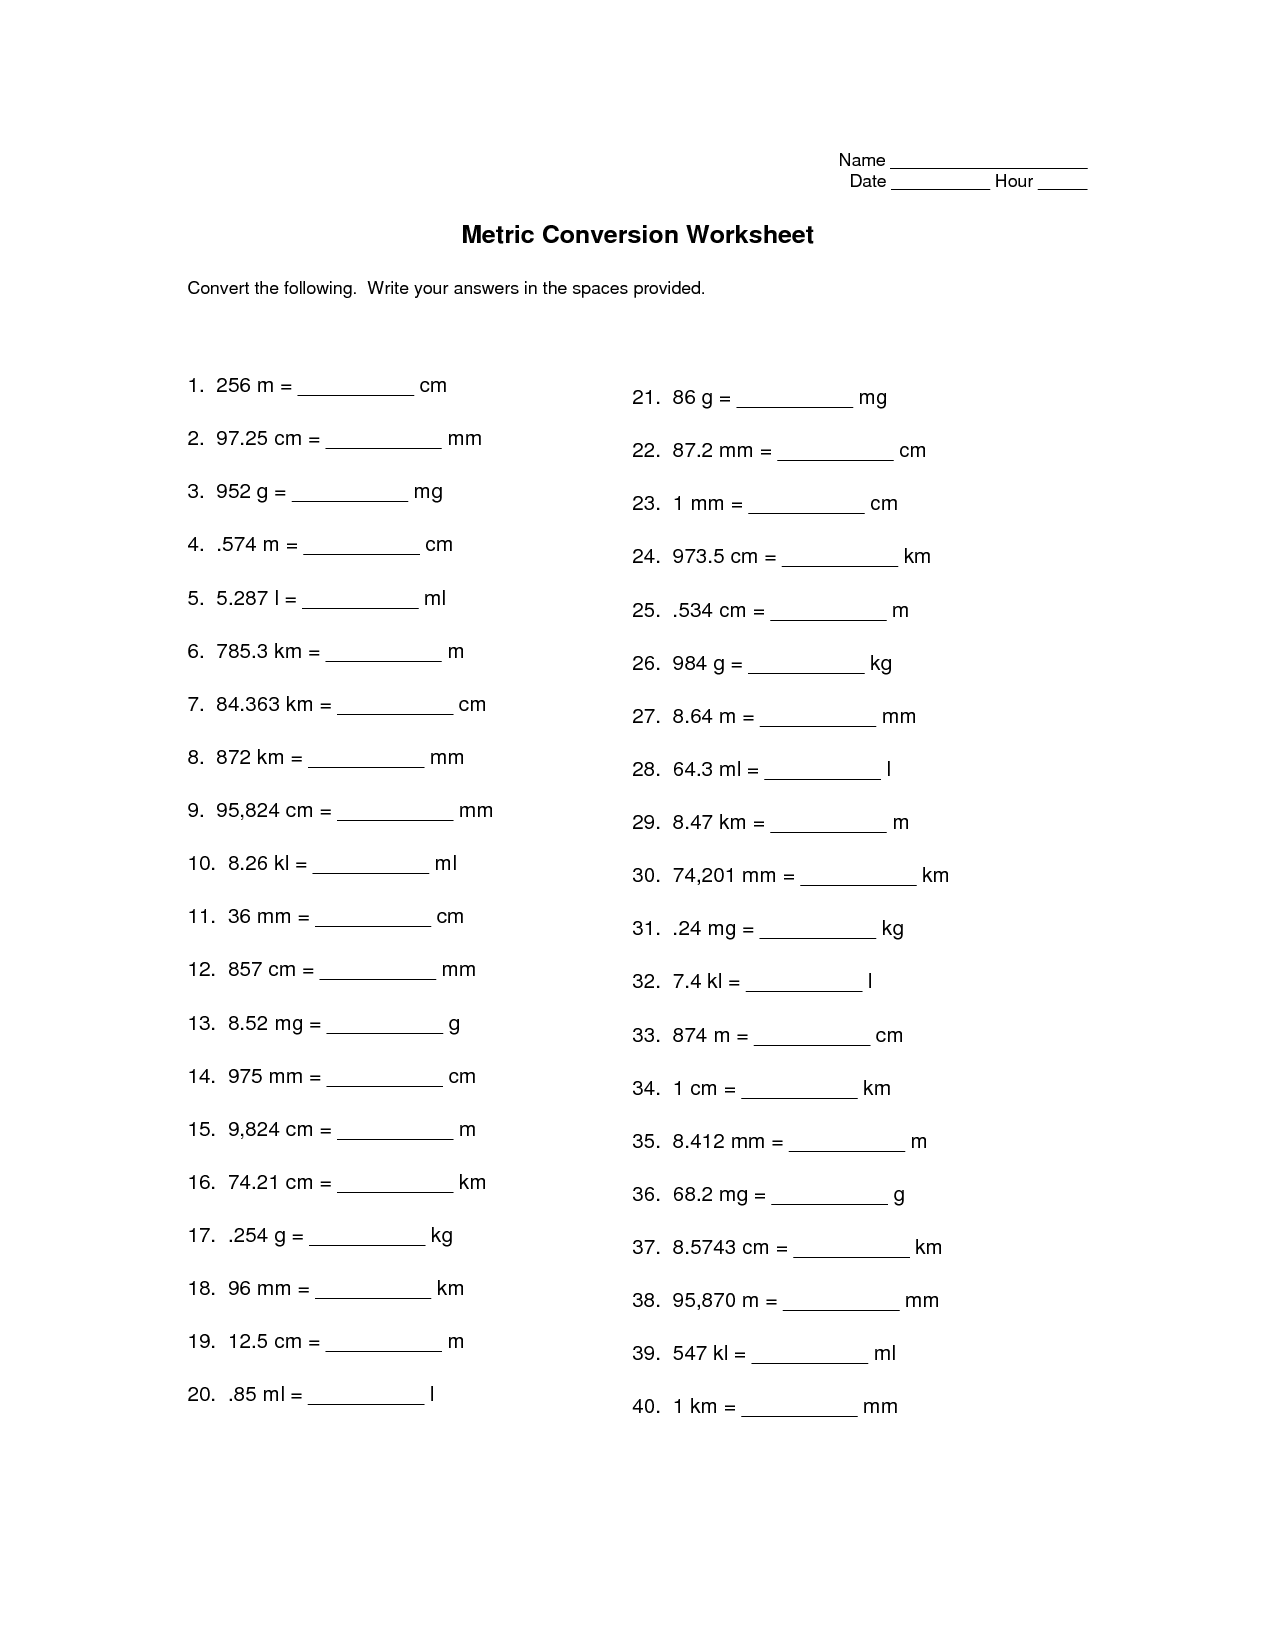 English Metric Conversion Worksheet 3 Answers